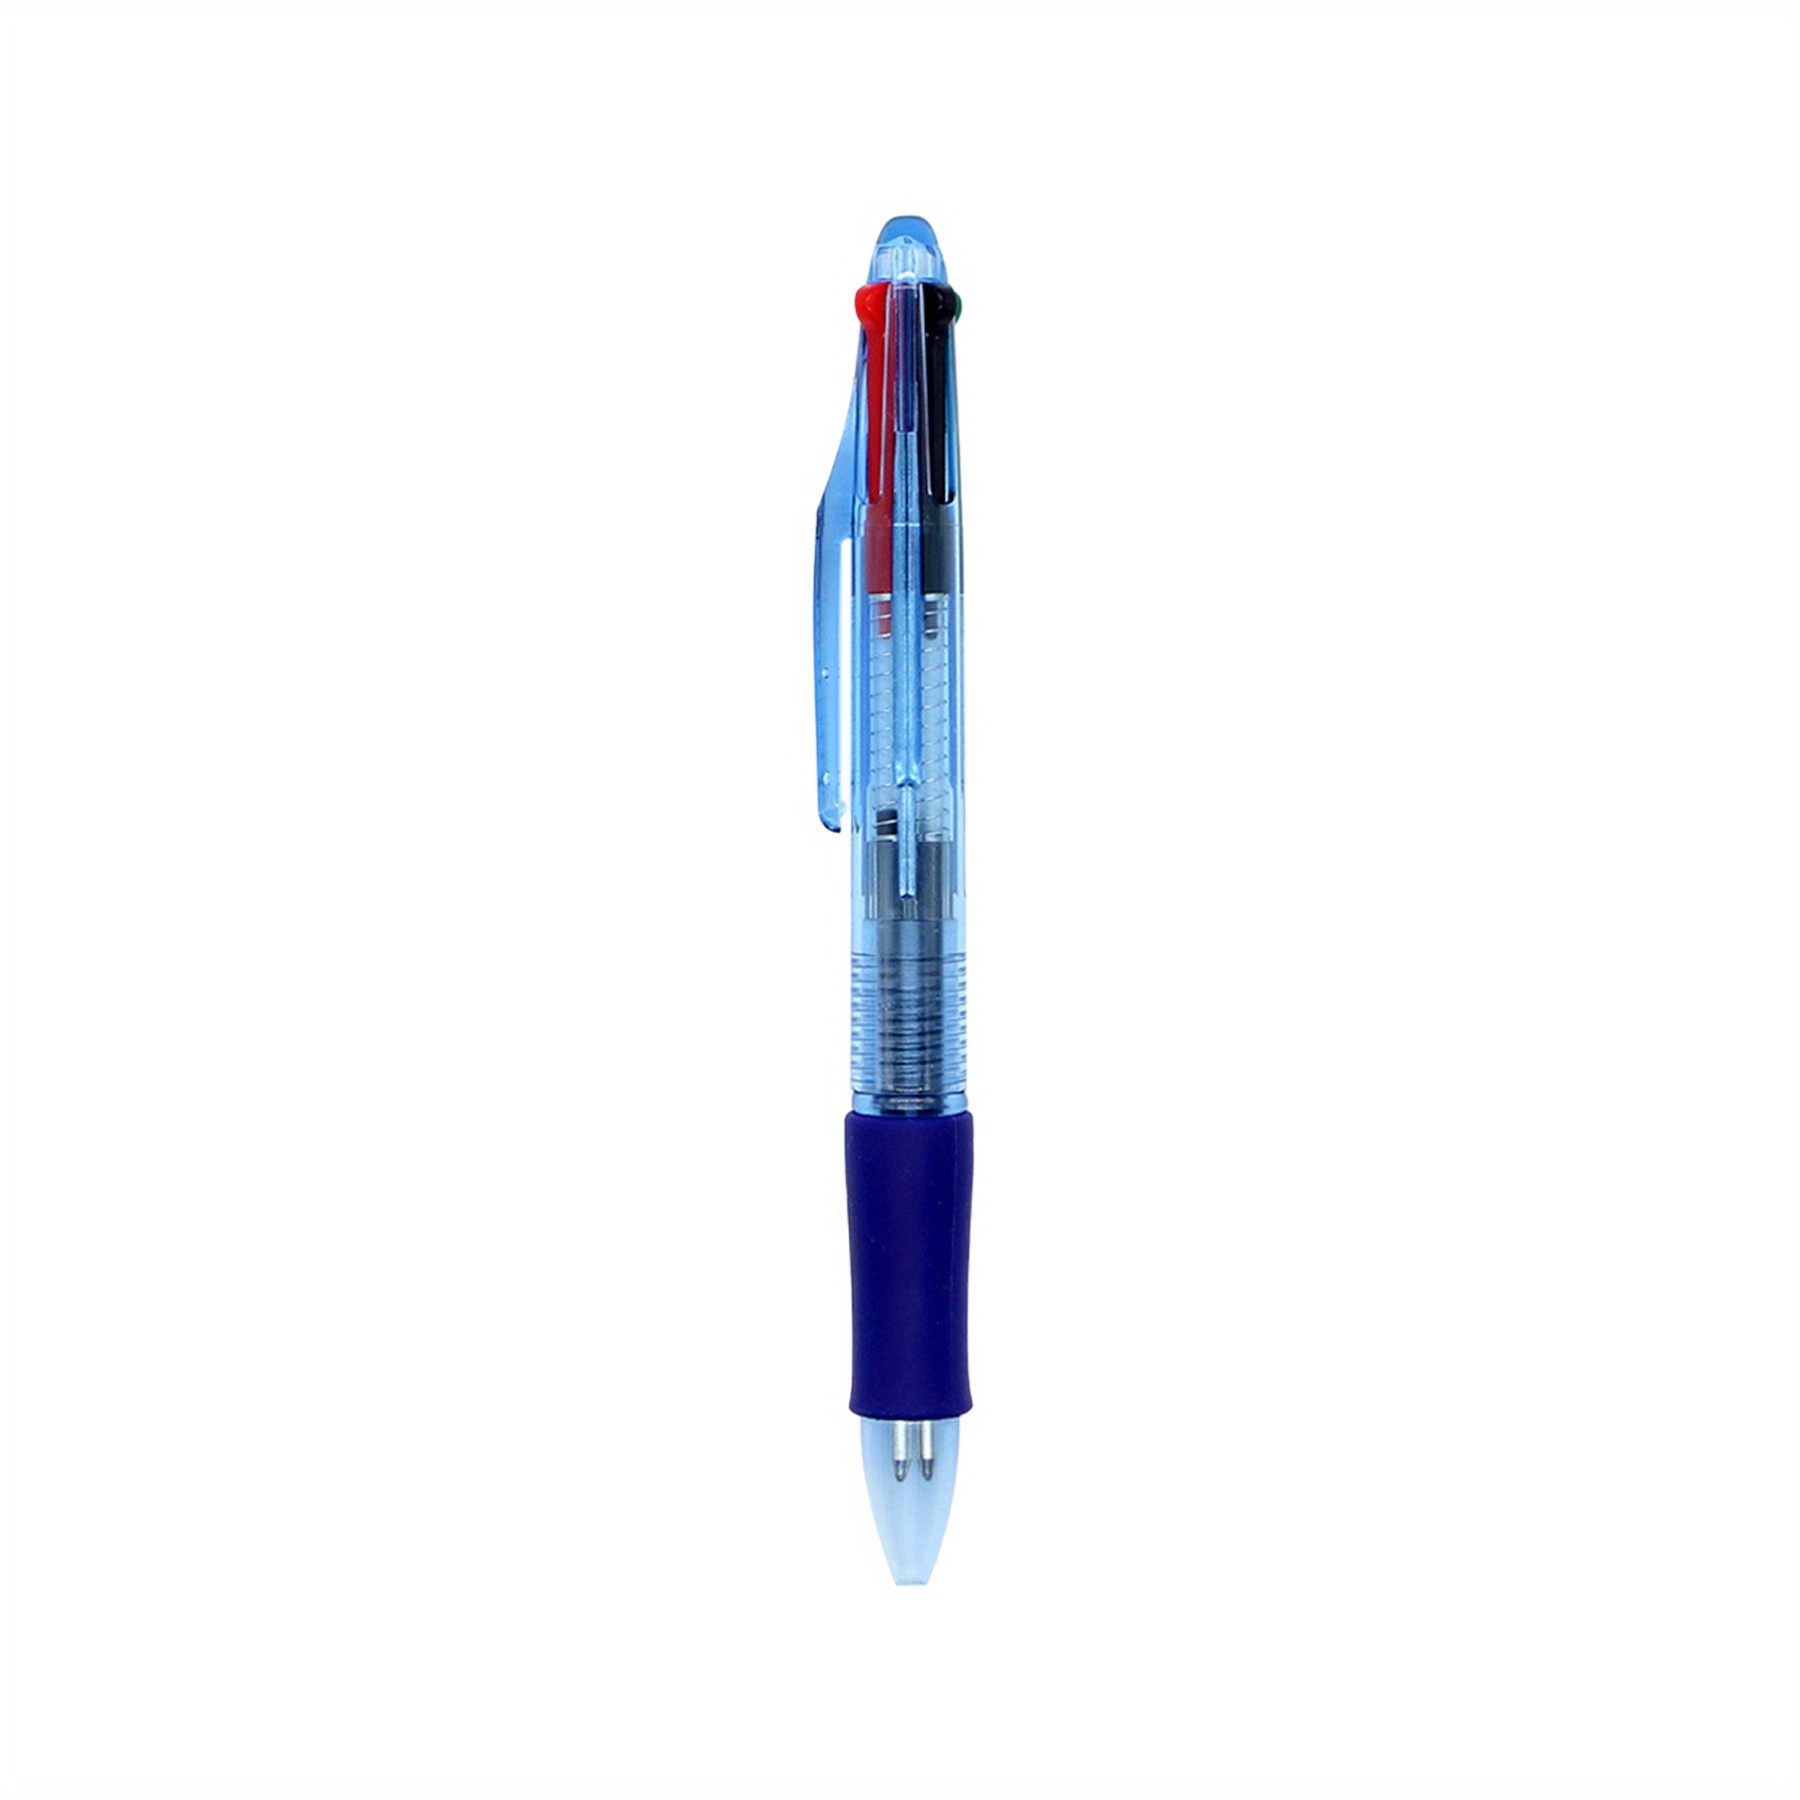 Multicolor?Pen?in?One, Ballpoint Pen 4-in-1 Multi Colored Pens, Retractable  Ball Point Pen 1.0mm